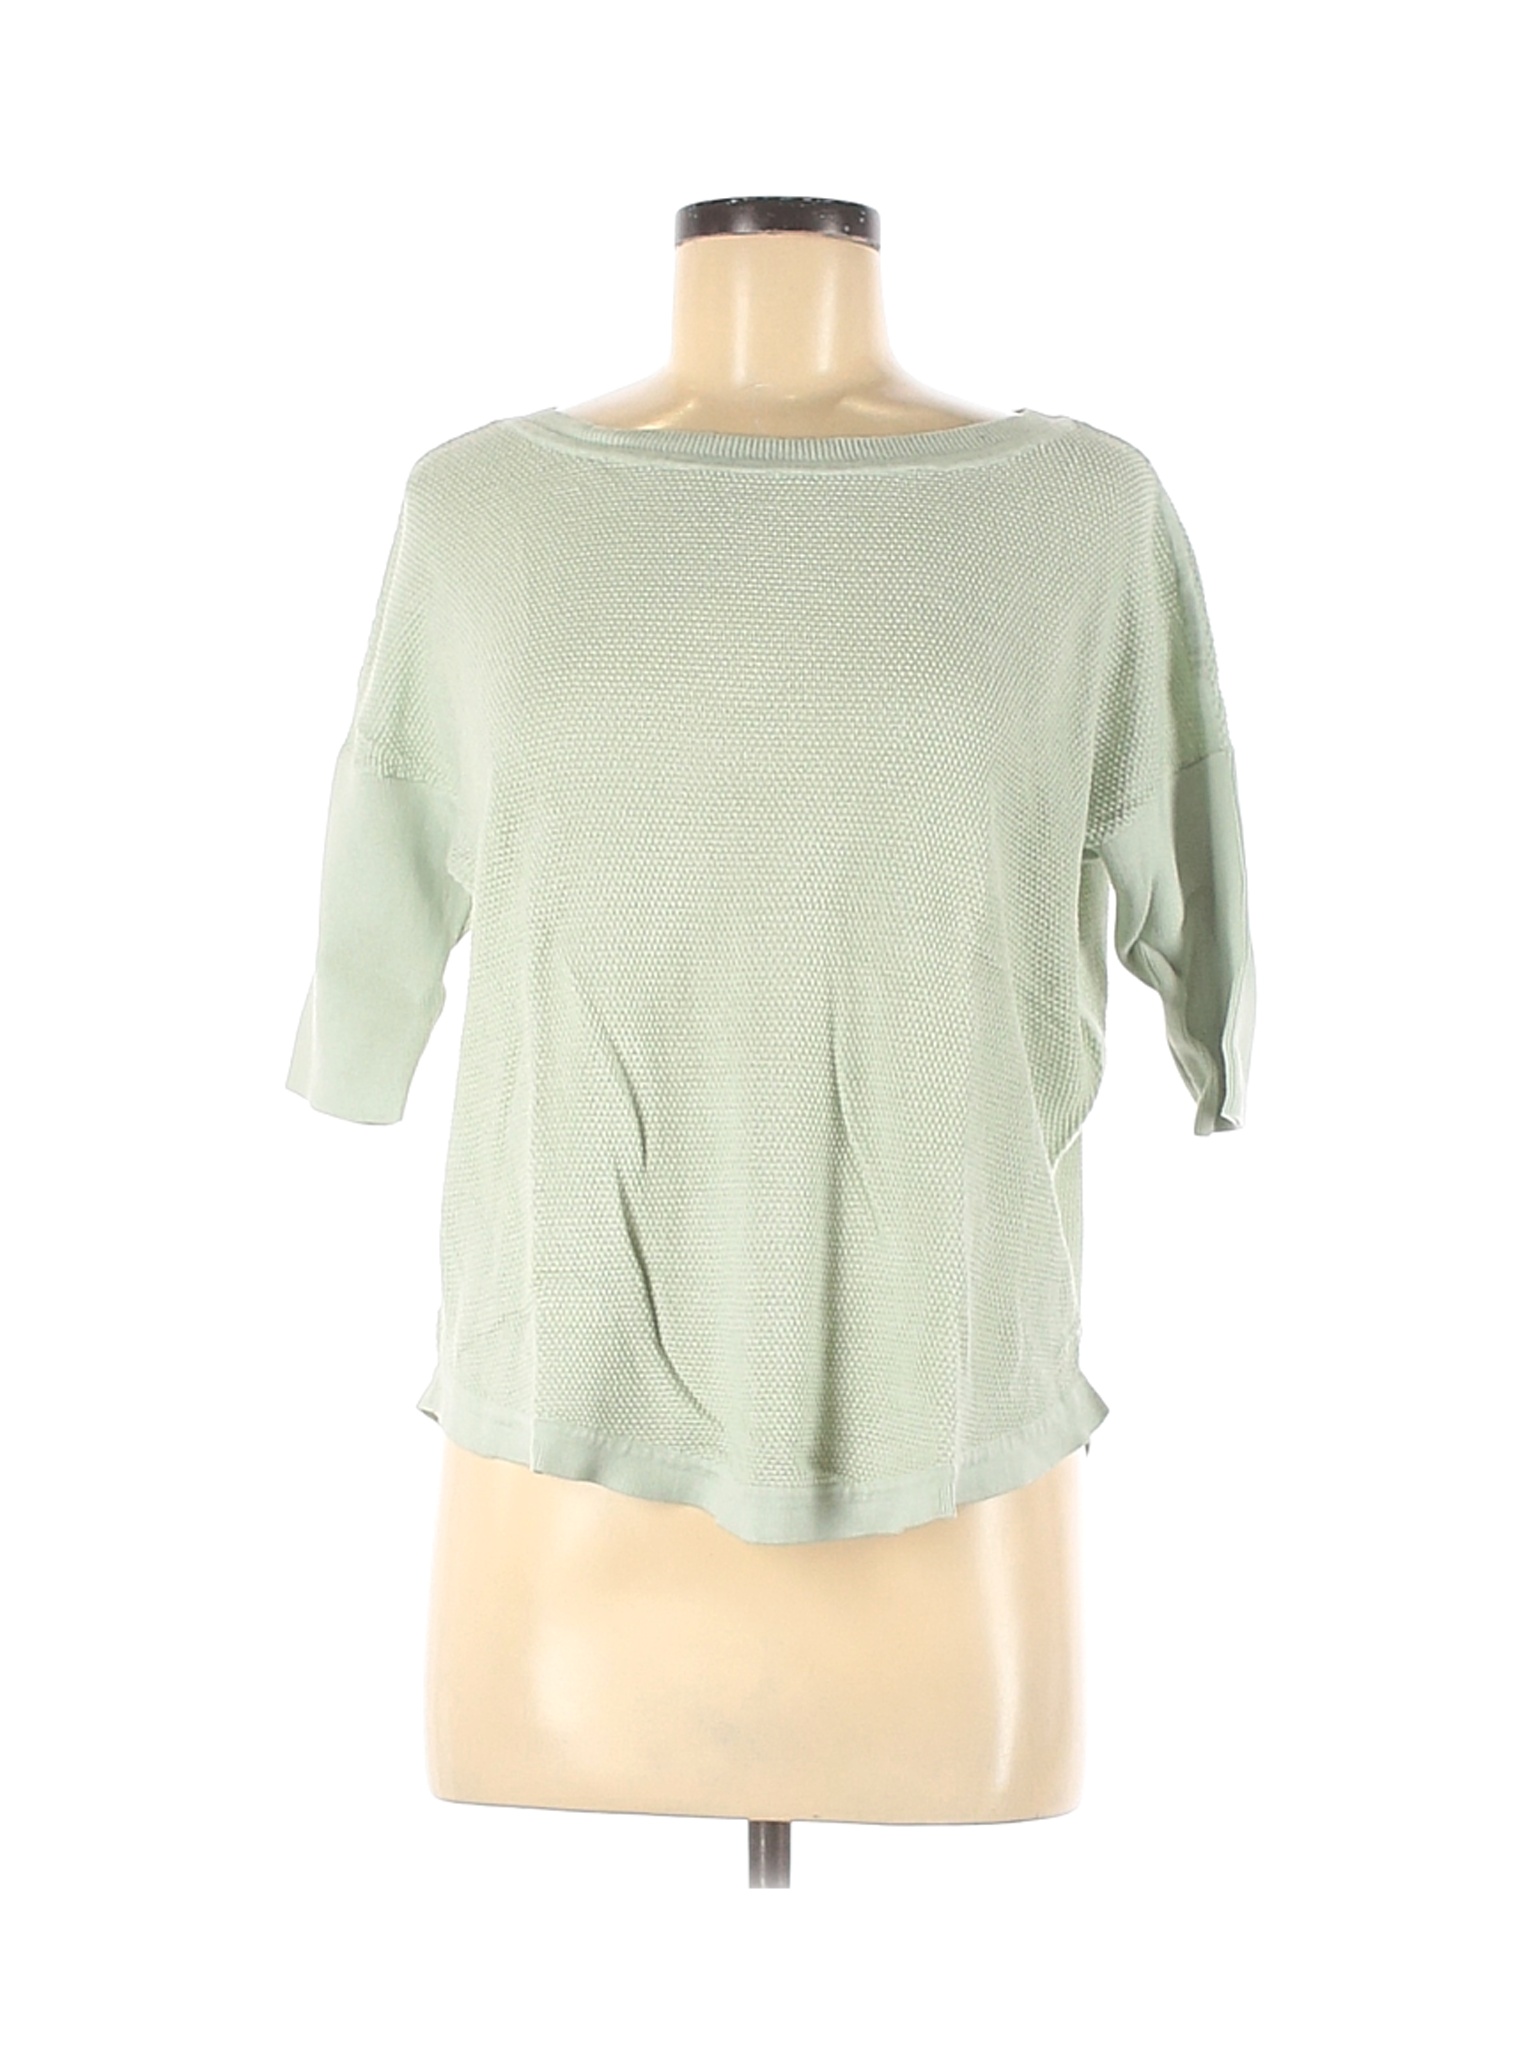 Banana Republic Women Green Pullover Sweater M | eBay